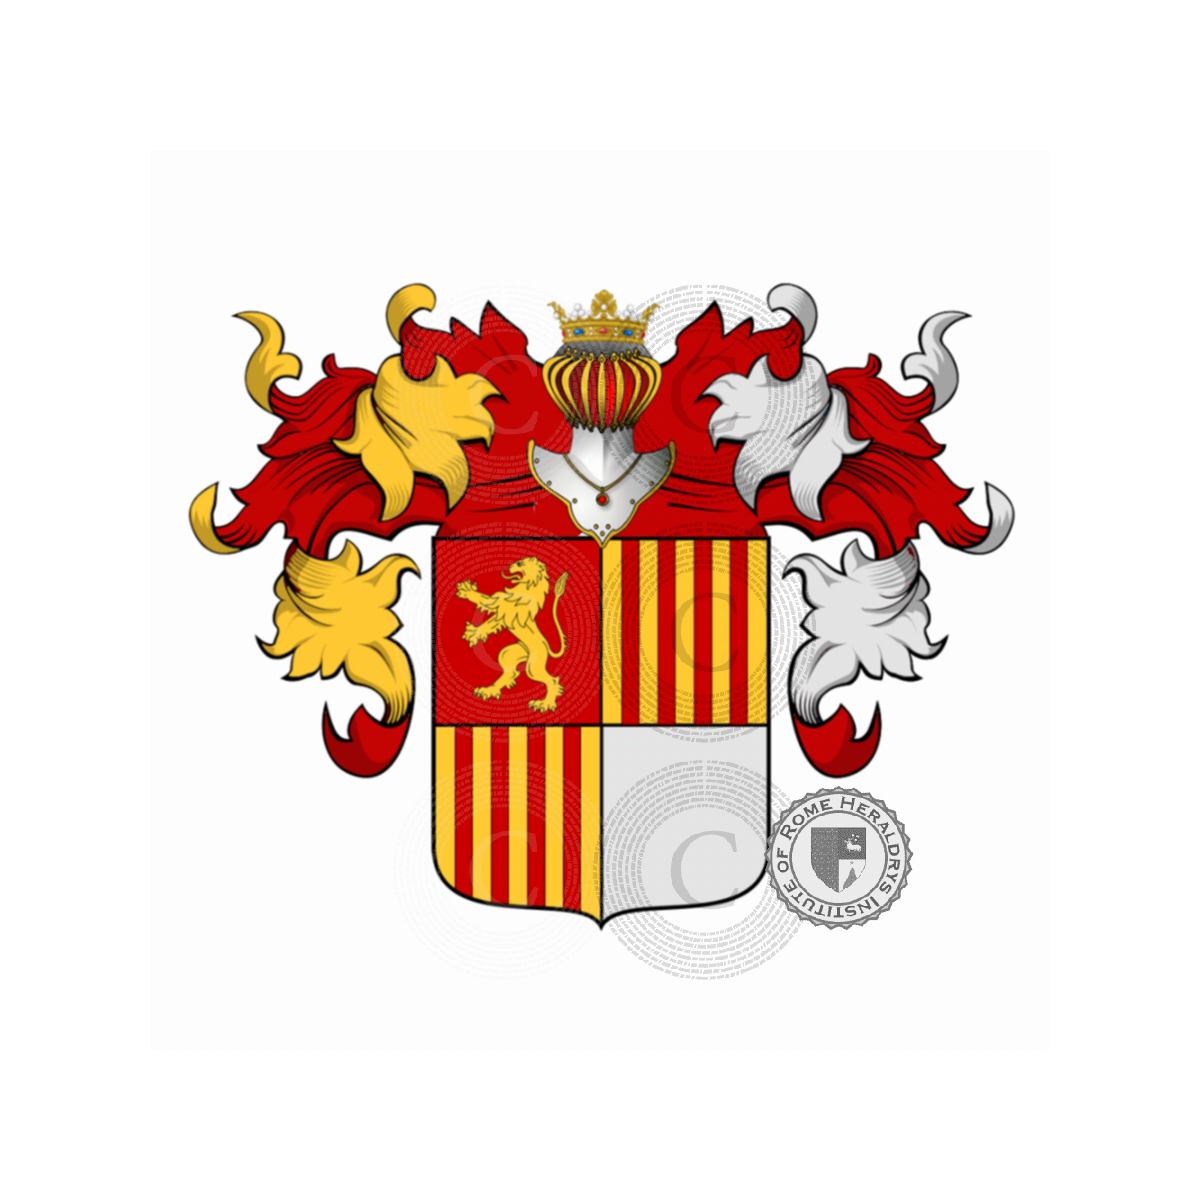 Brasão da famíliaRuggi d'Aragona